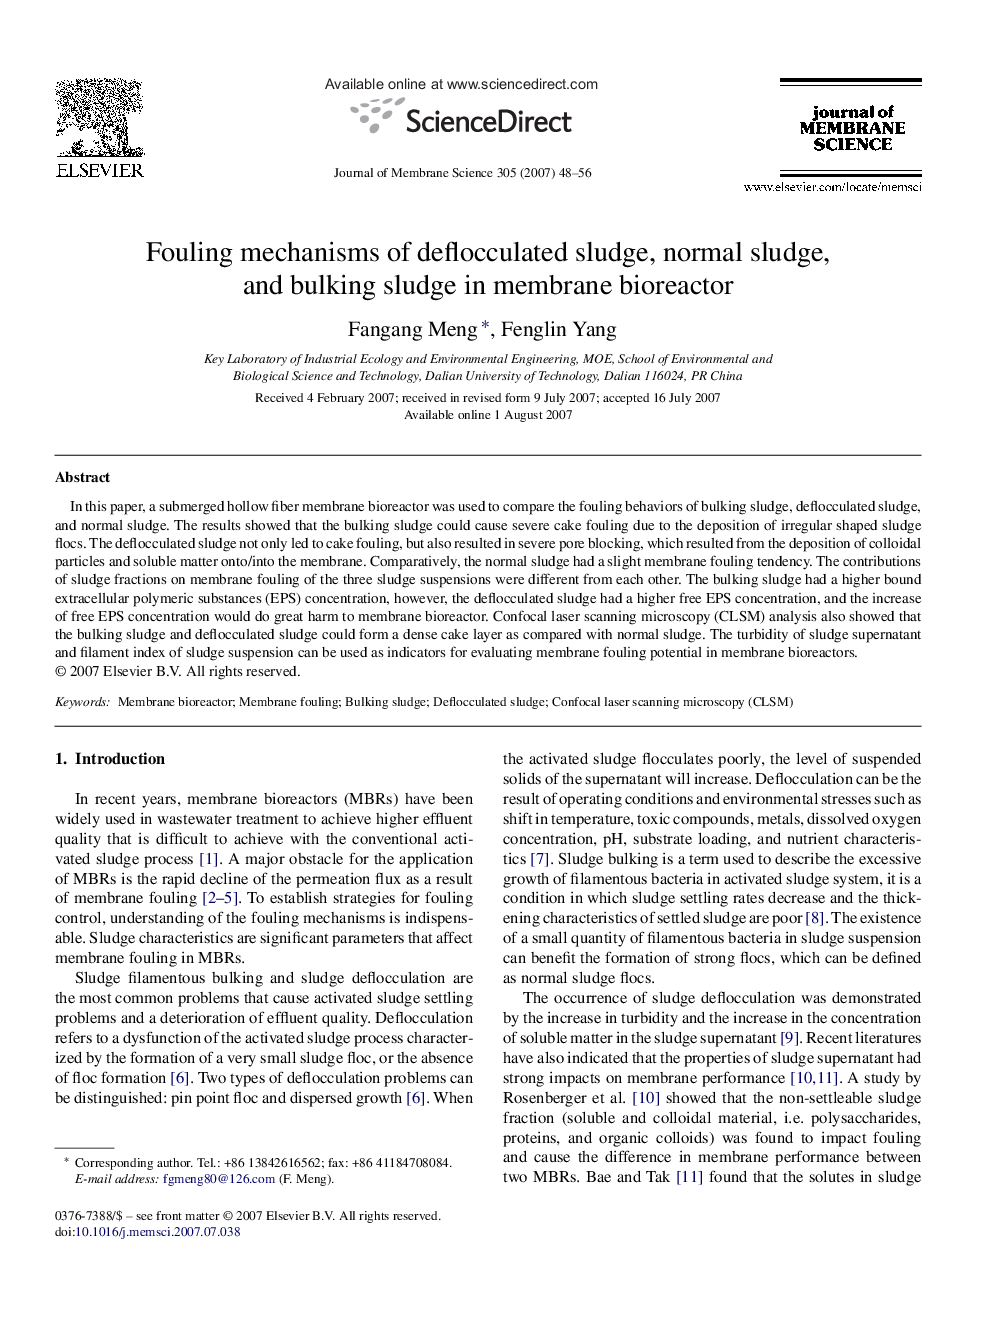 Fouling mechanisms of deflocculated sludge, normal sludge, and bulking sludge in membrane bioreactor